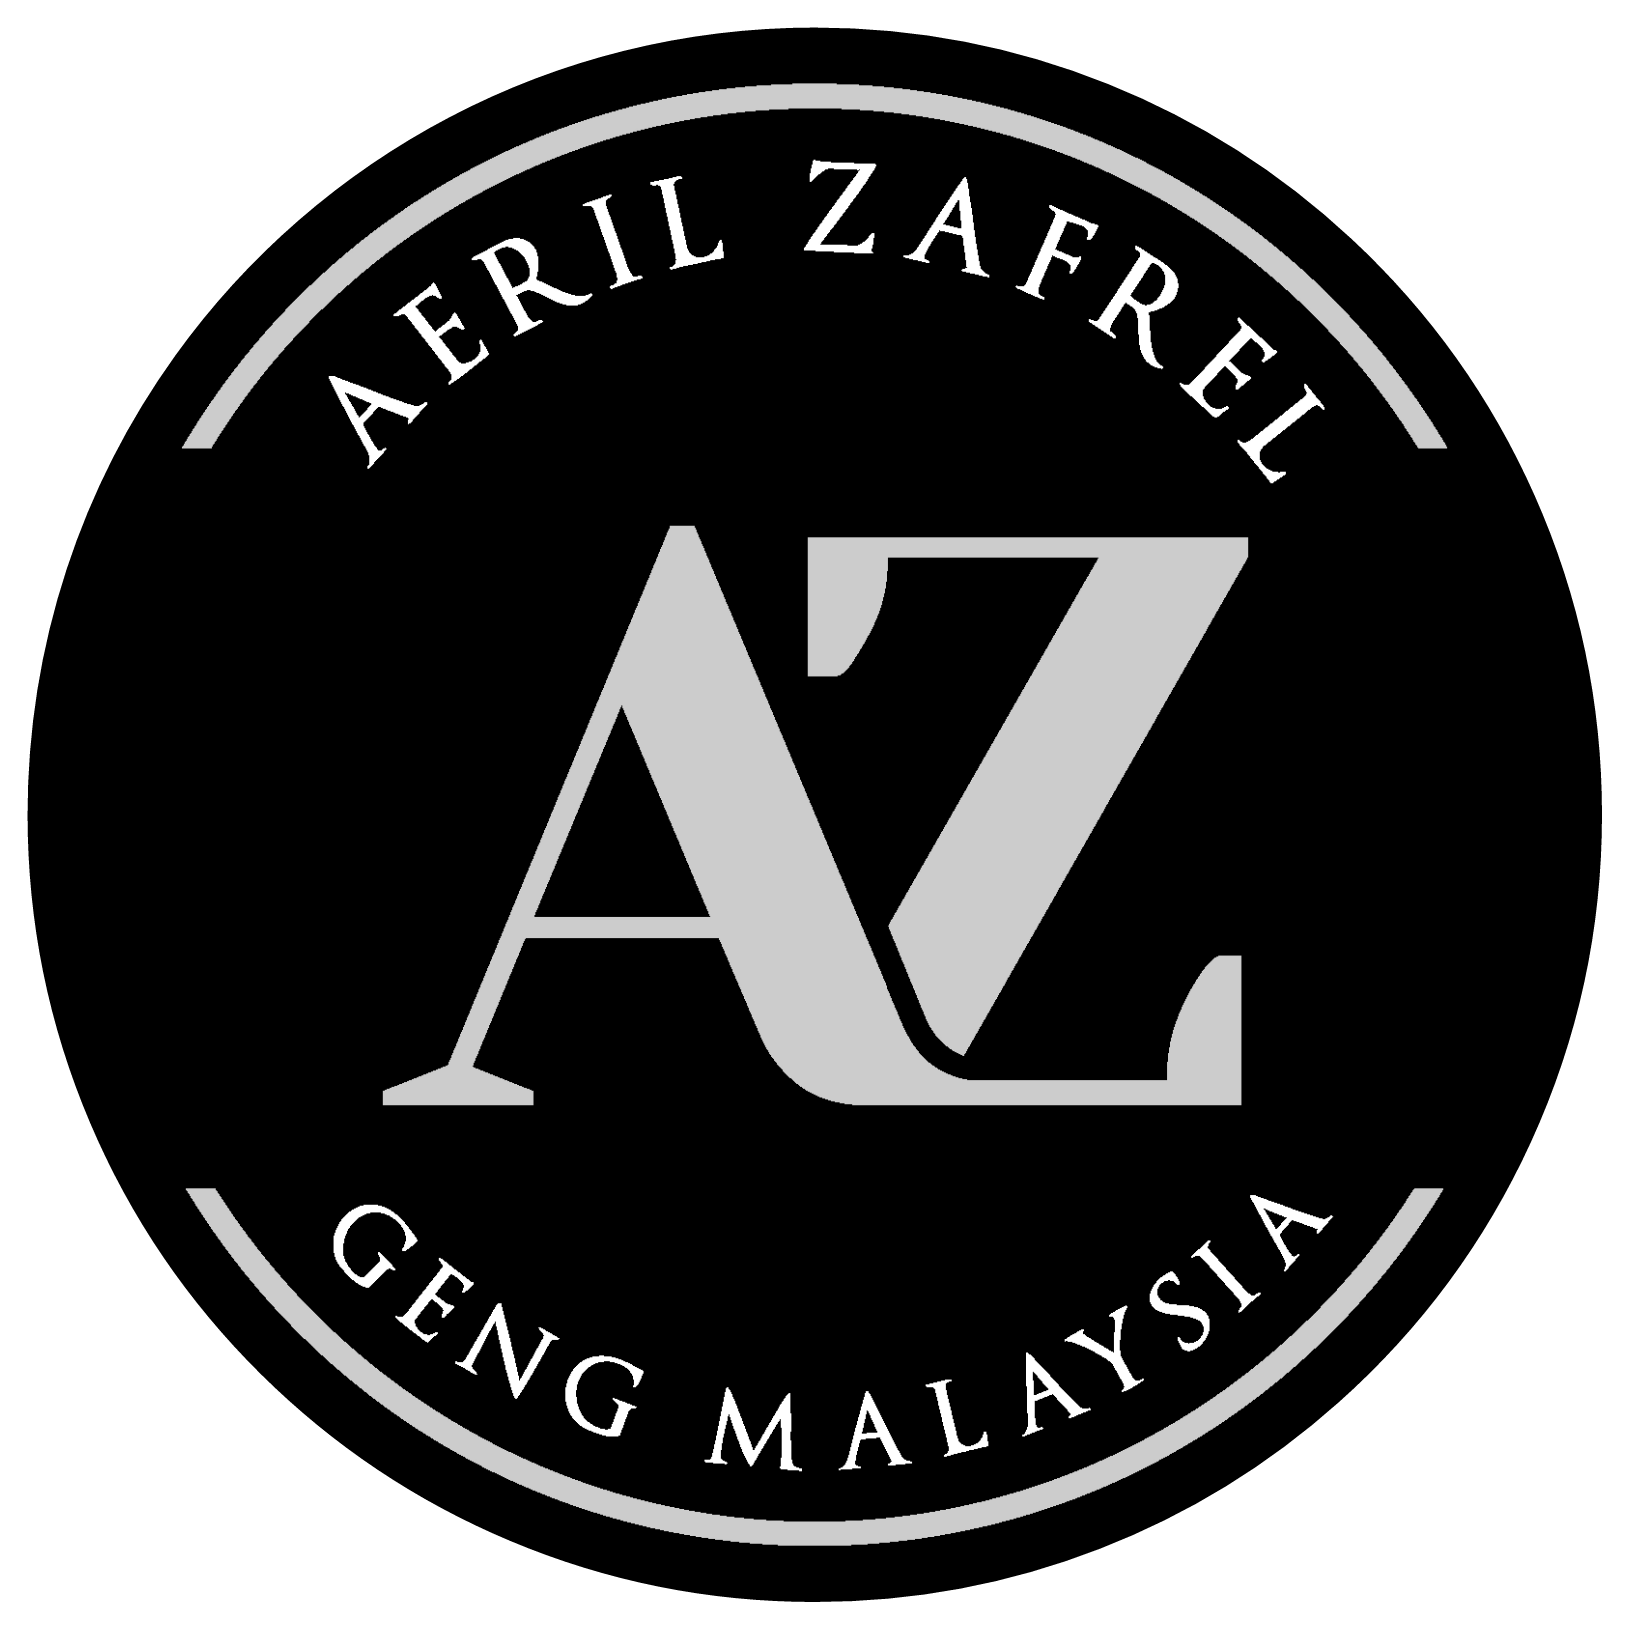 Monitored & Managed by #ZafrelGeng's.

OFFICIAL @aerilzafrel's GENG!

FB: Aeril Zafrel Geng Malaysia
IG:  @zafrel_geng